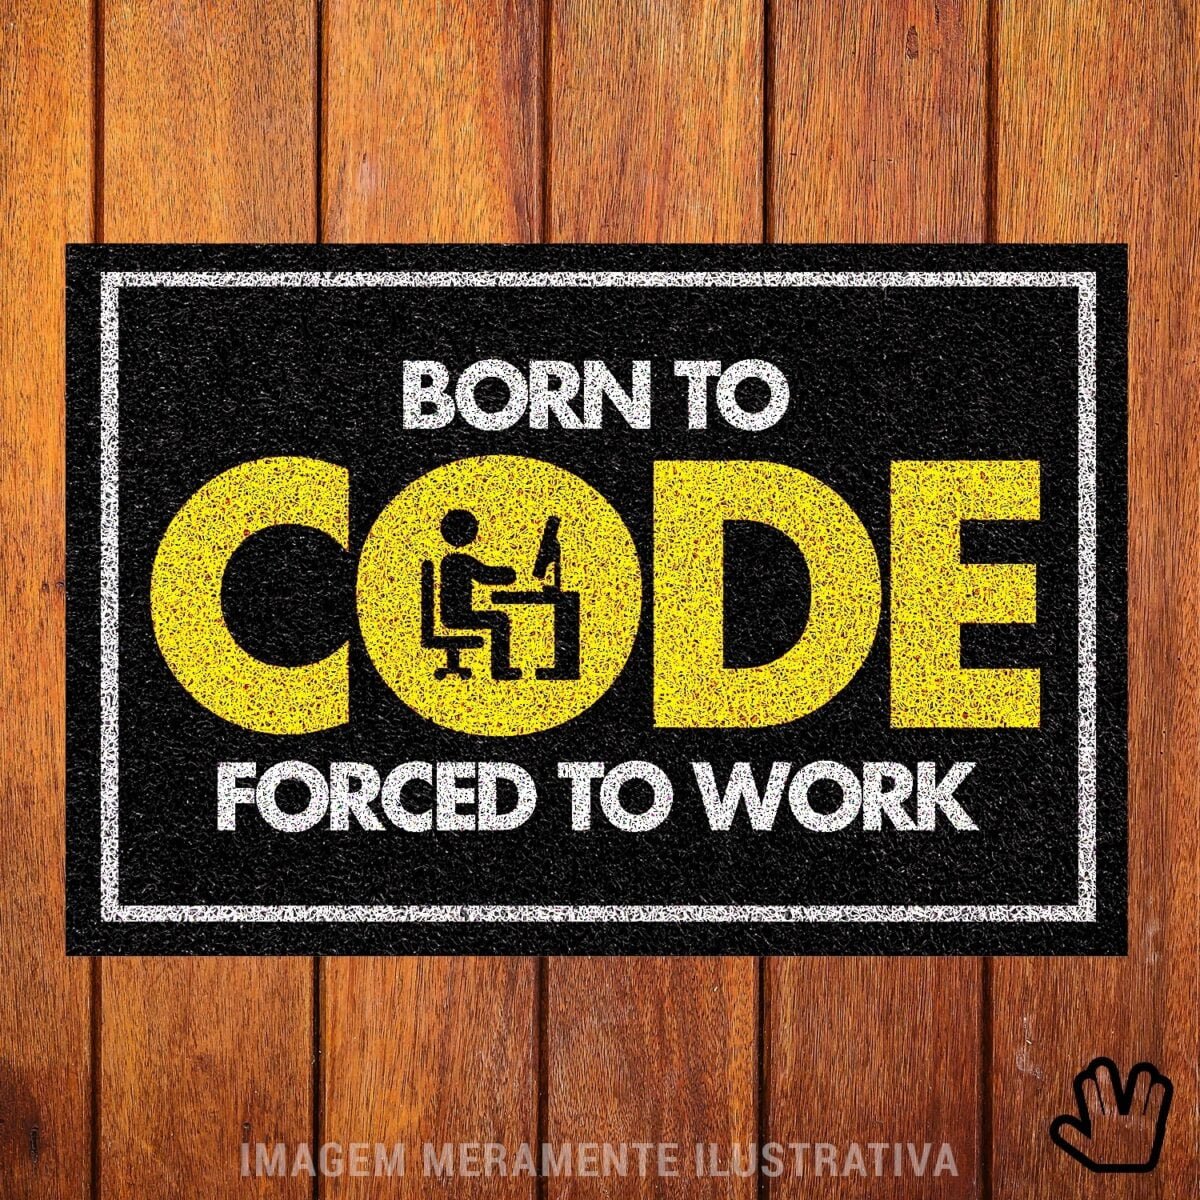 Capacho Born to Code